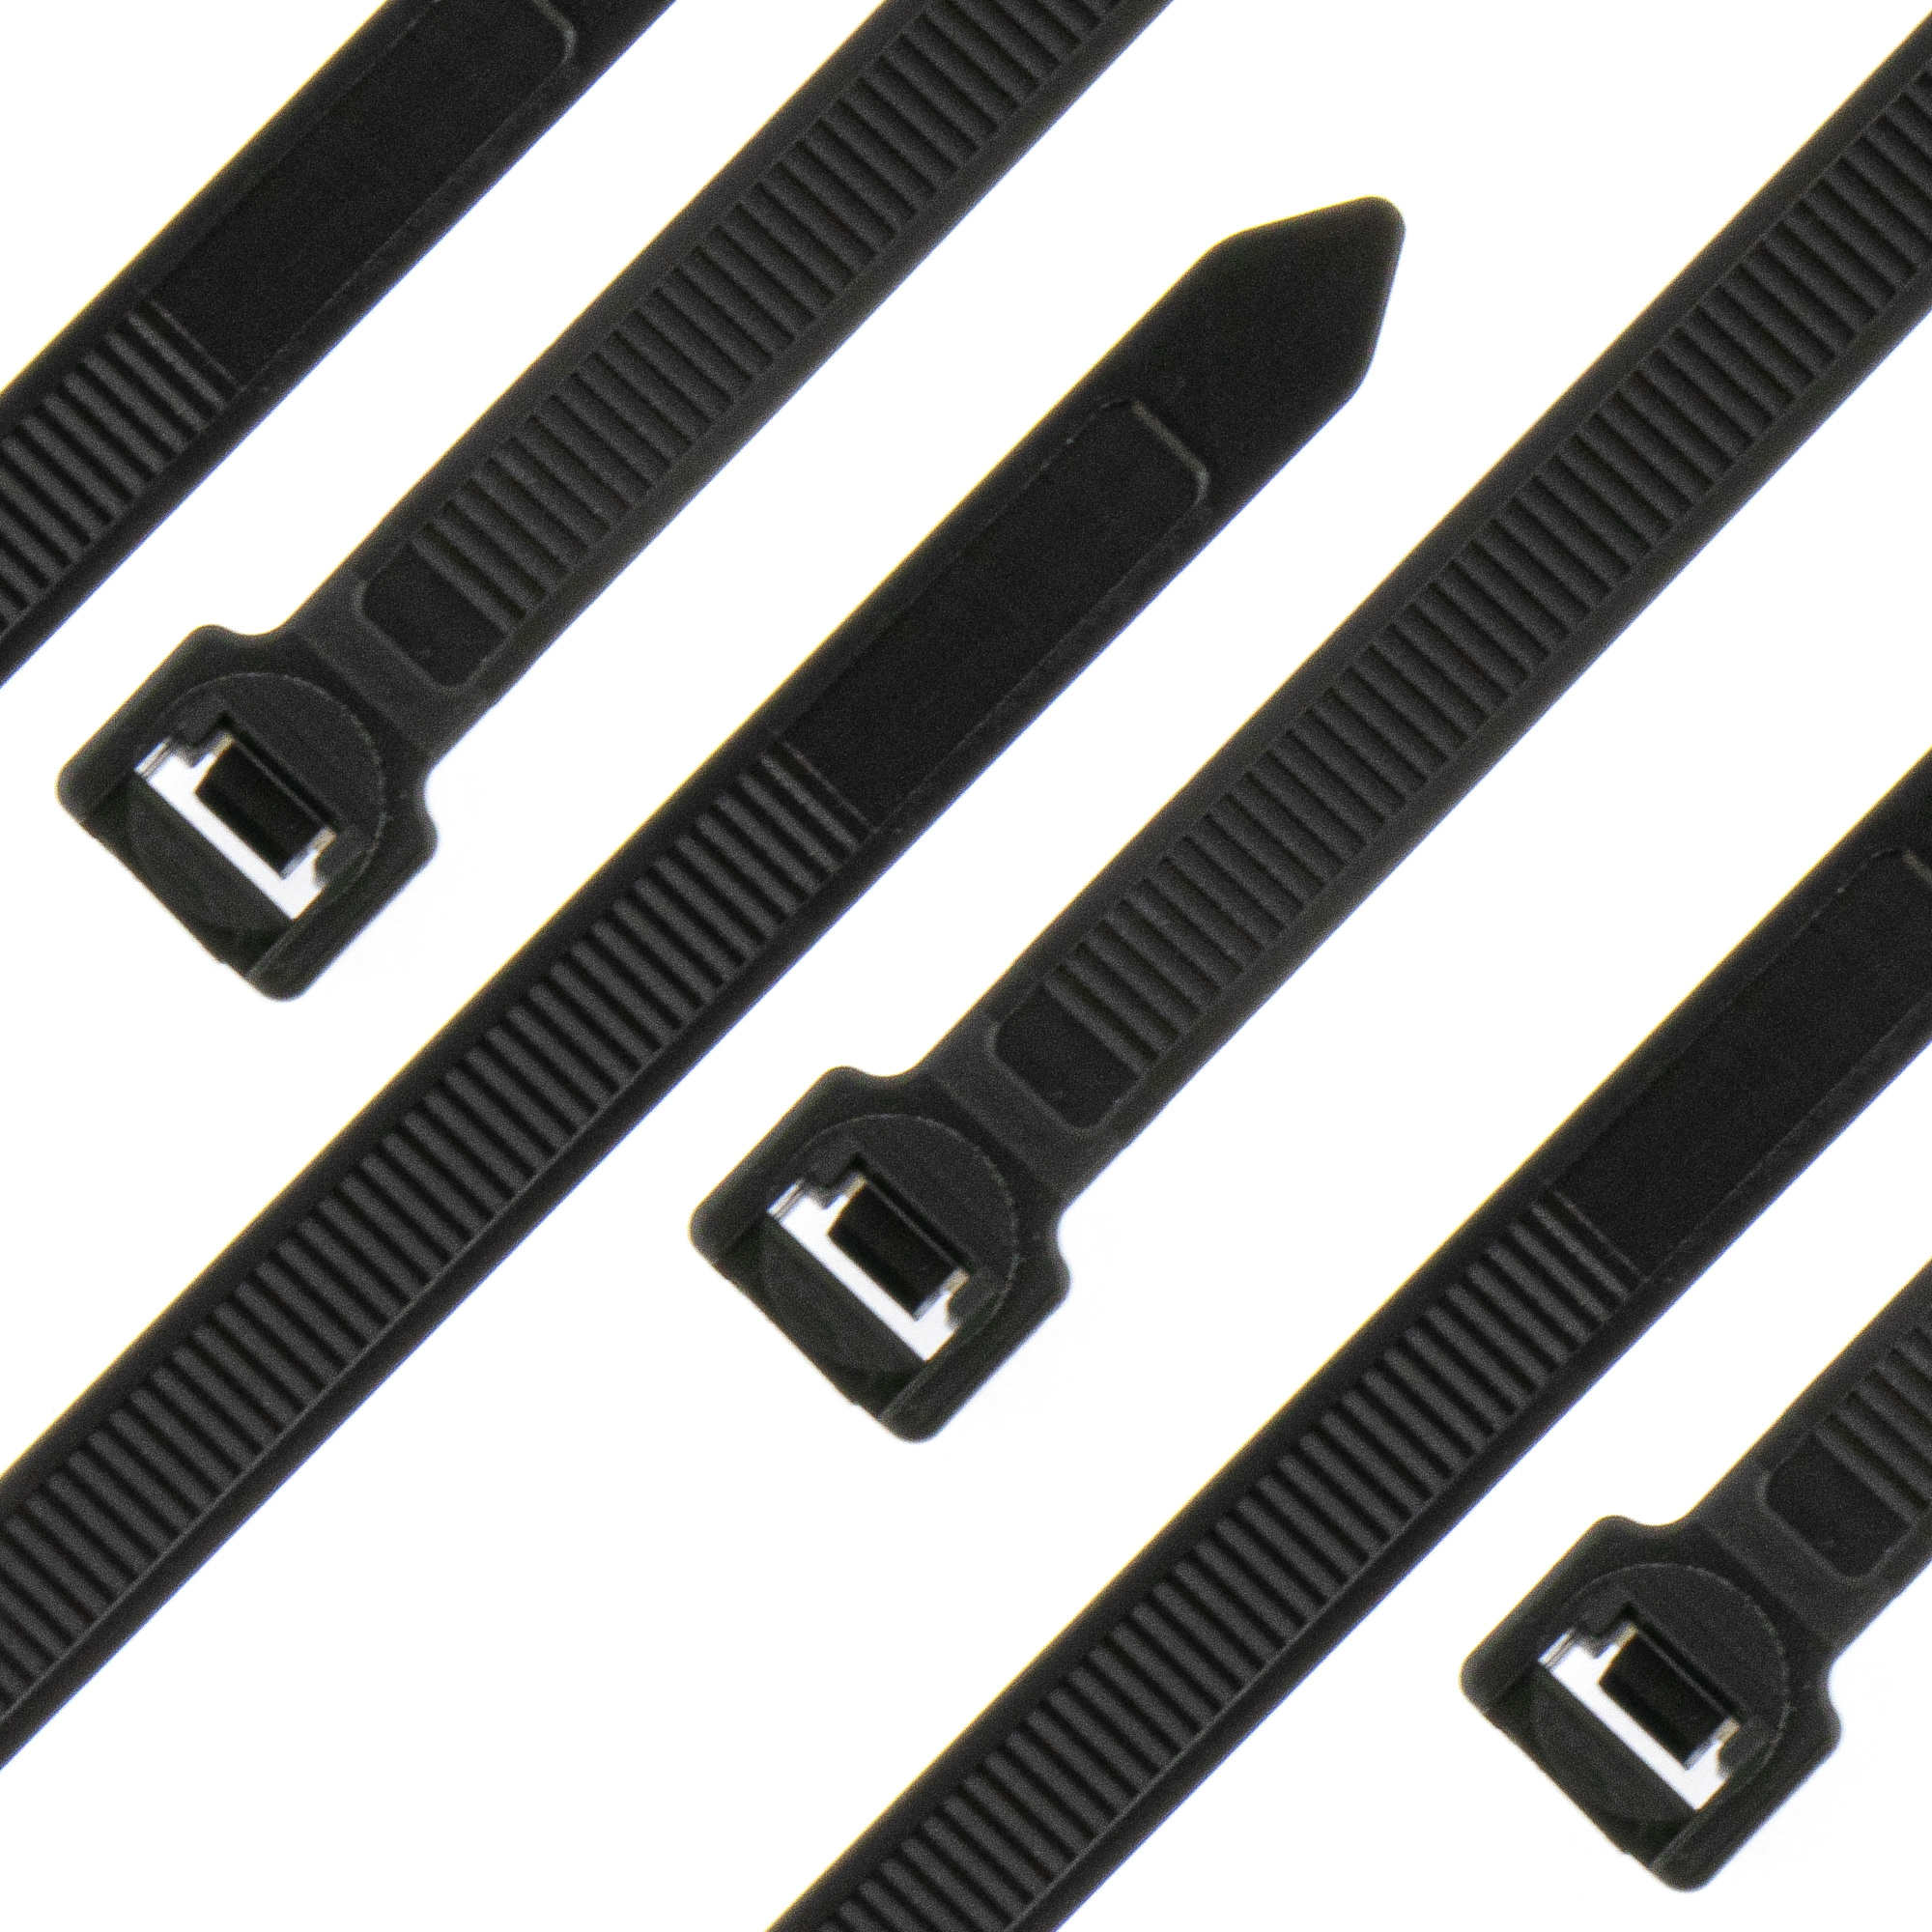 Cable tie self-locking 710 x 9,0mm, black, 100PCS